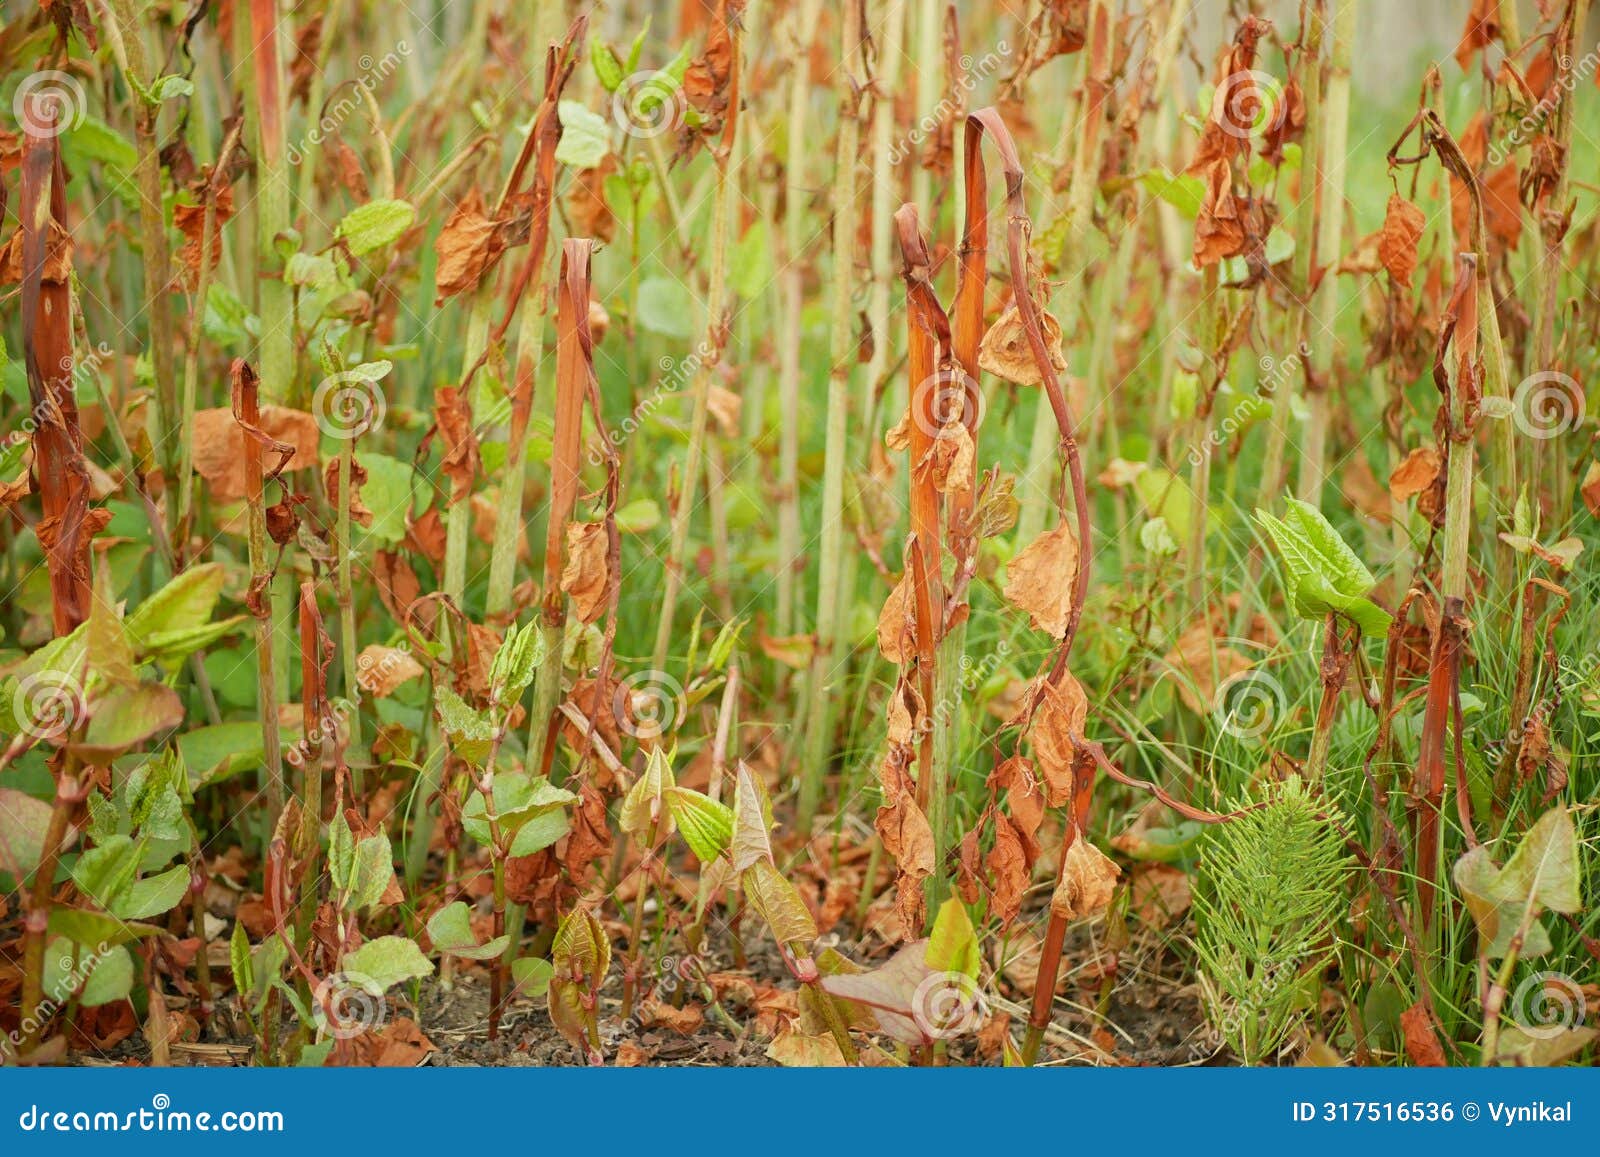 reynoutria knotweed sprayed herbicide roundup destroys leaves leaf spray close-up invasive village house detail and